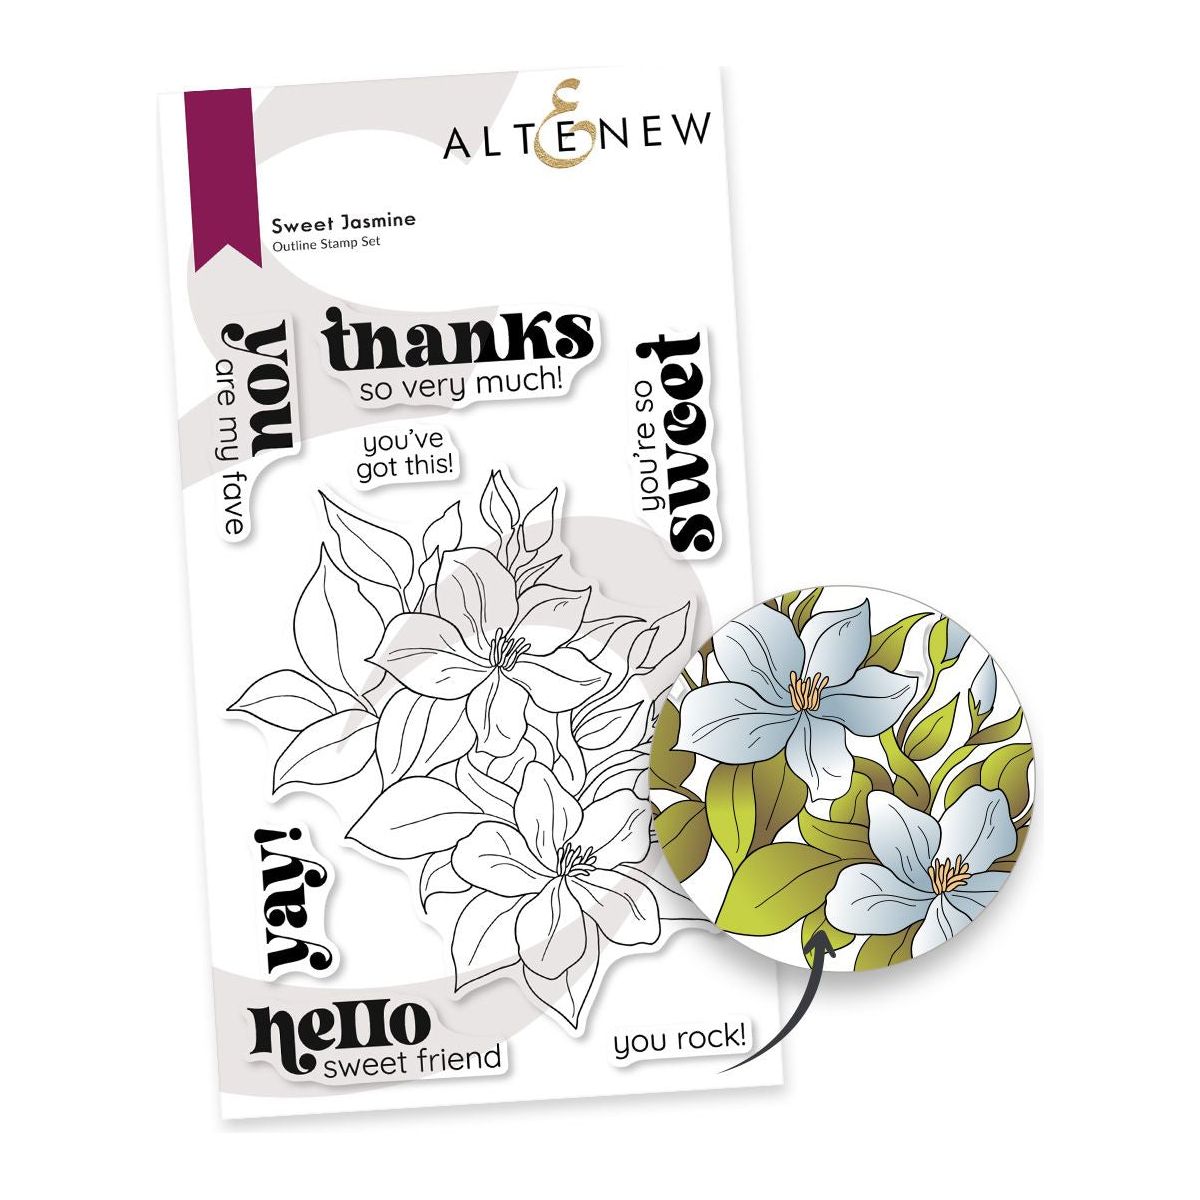 Altenew Sweet Jasmine Clear Stamp Set